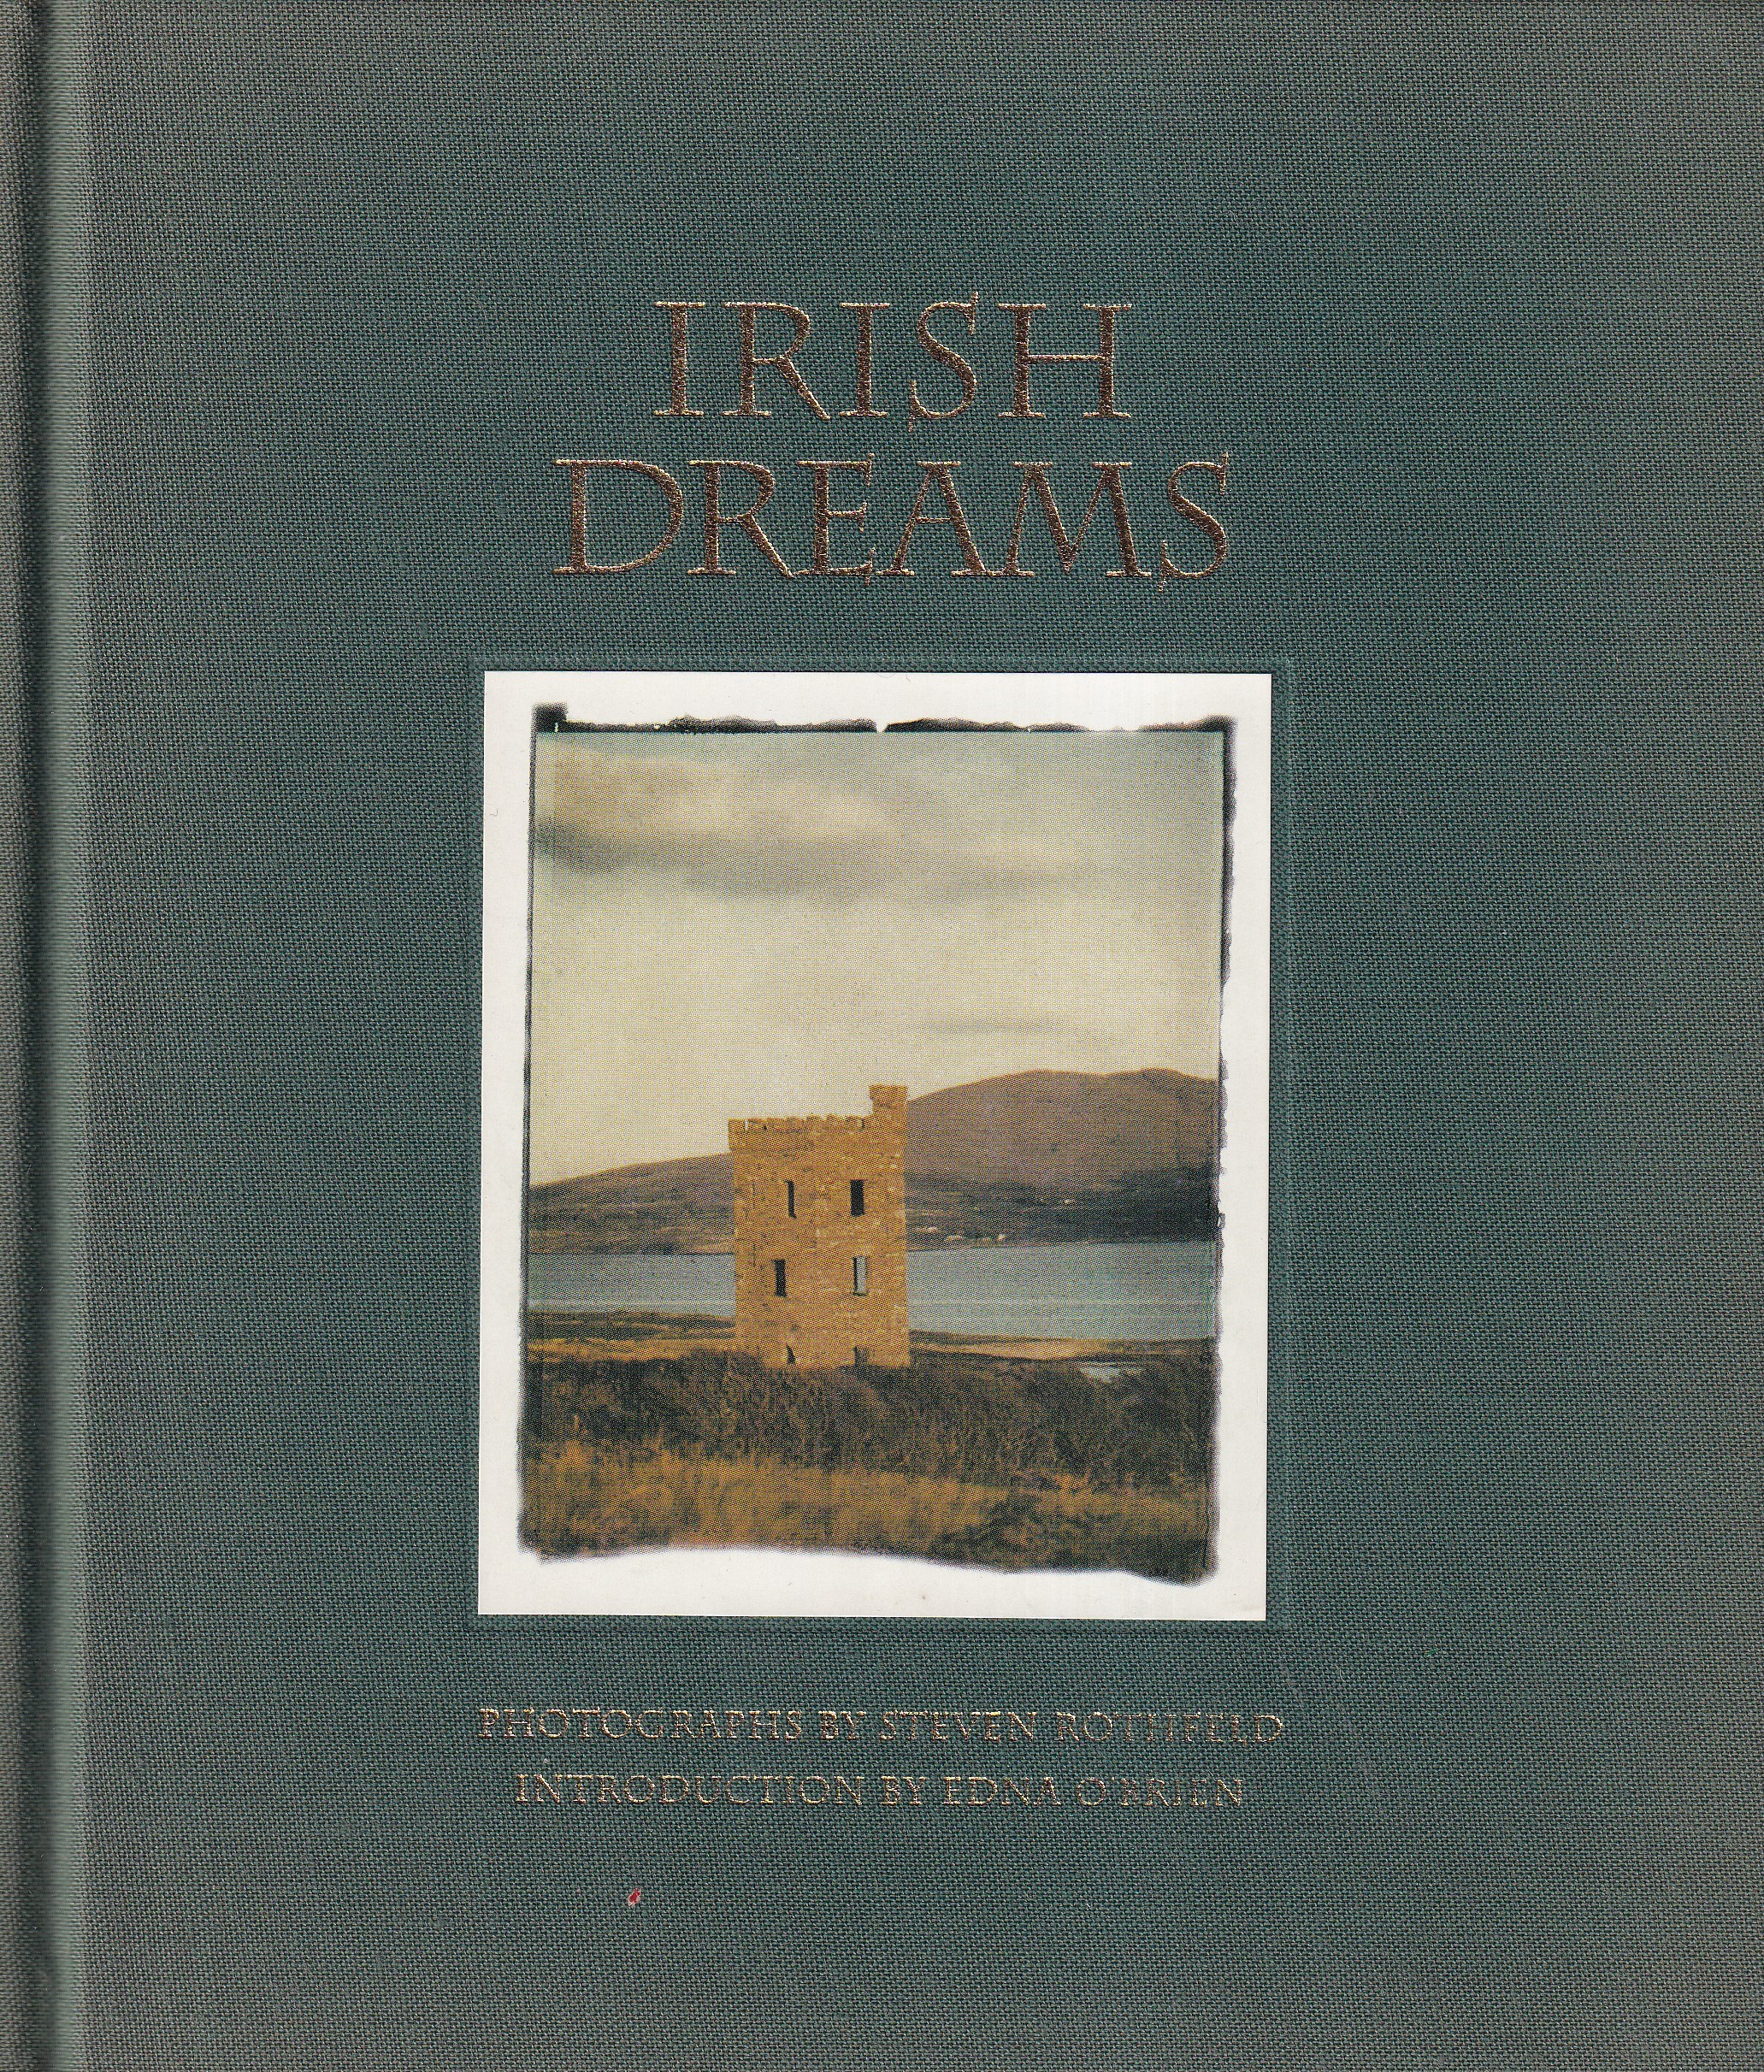 Irish Dreams by Steven Rothfeld